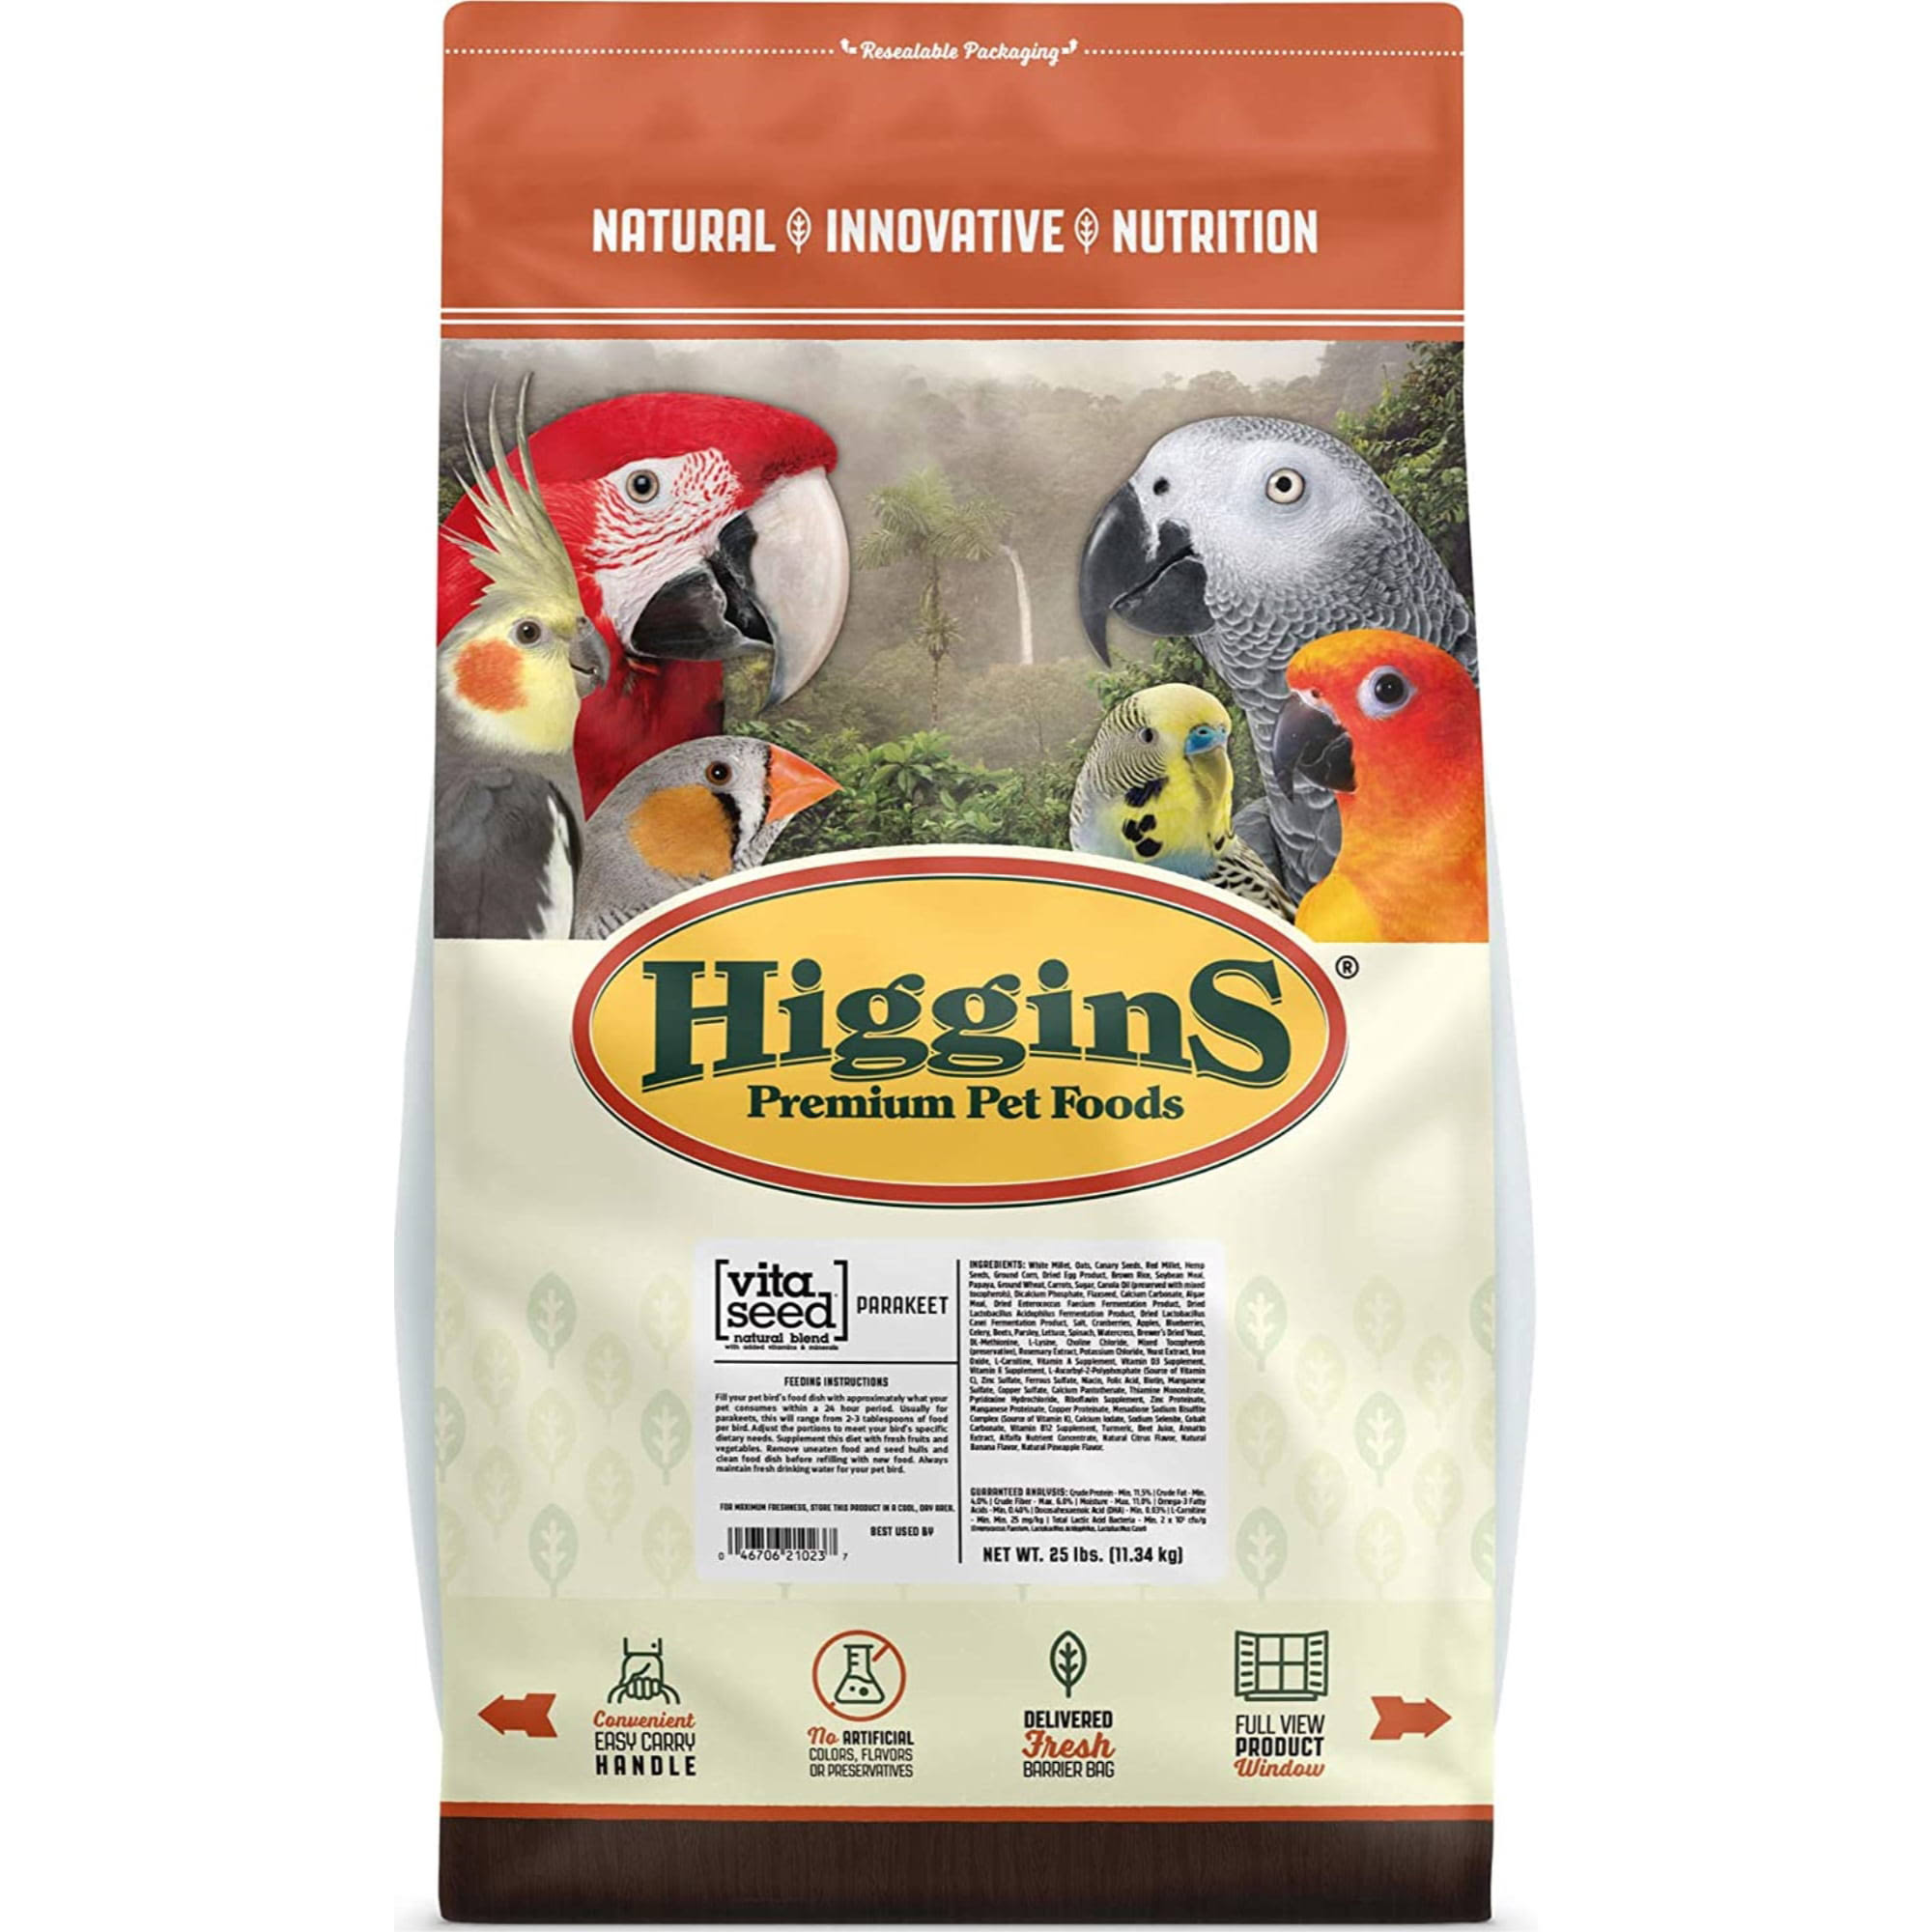 Higgins Vita Seed Parakeet Food for Birds - 25lb